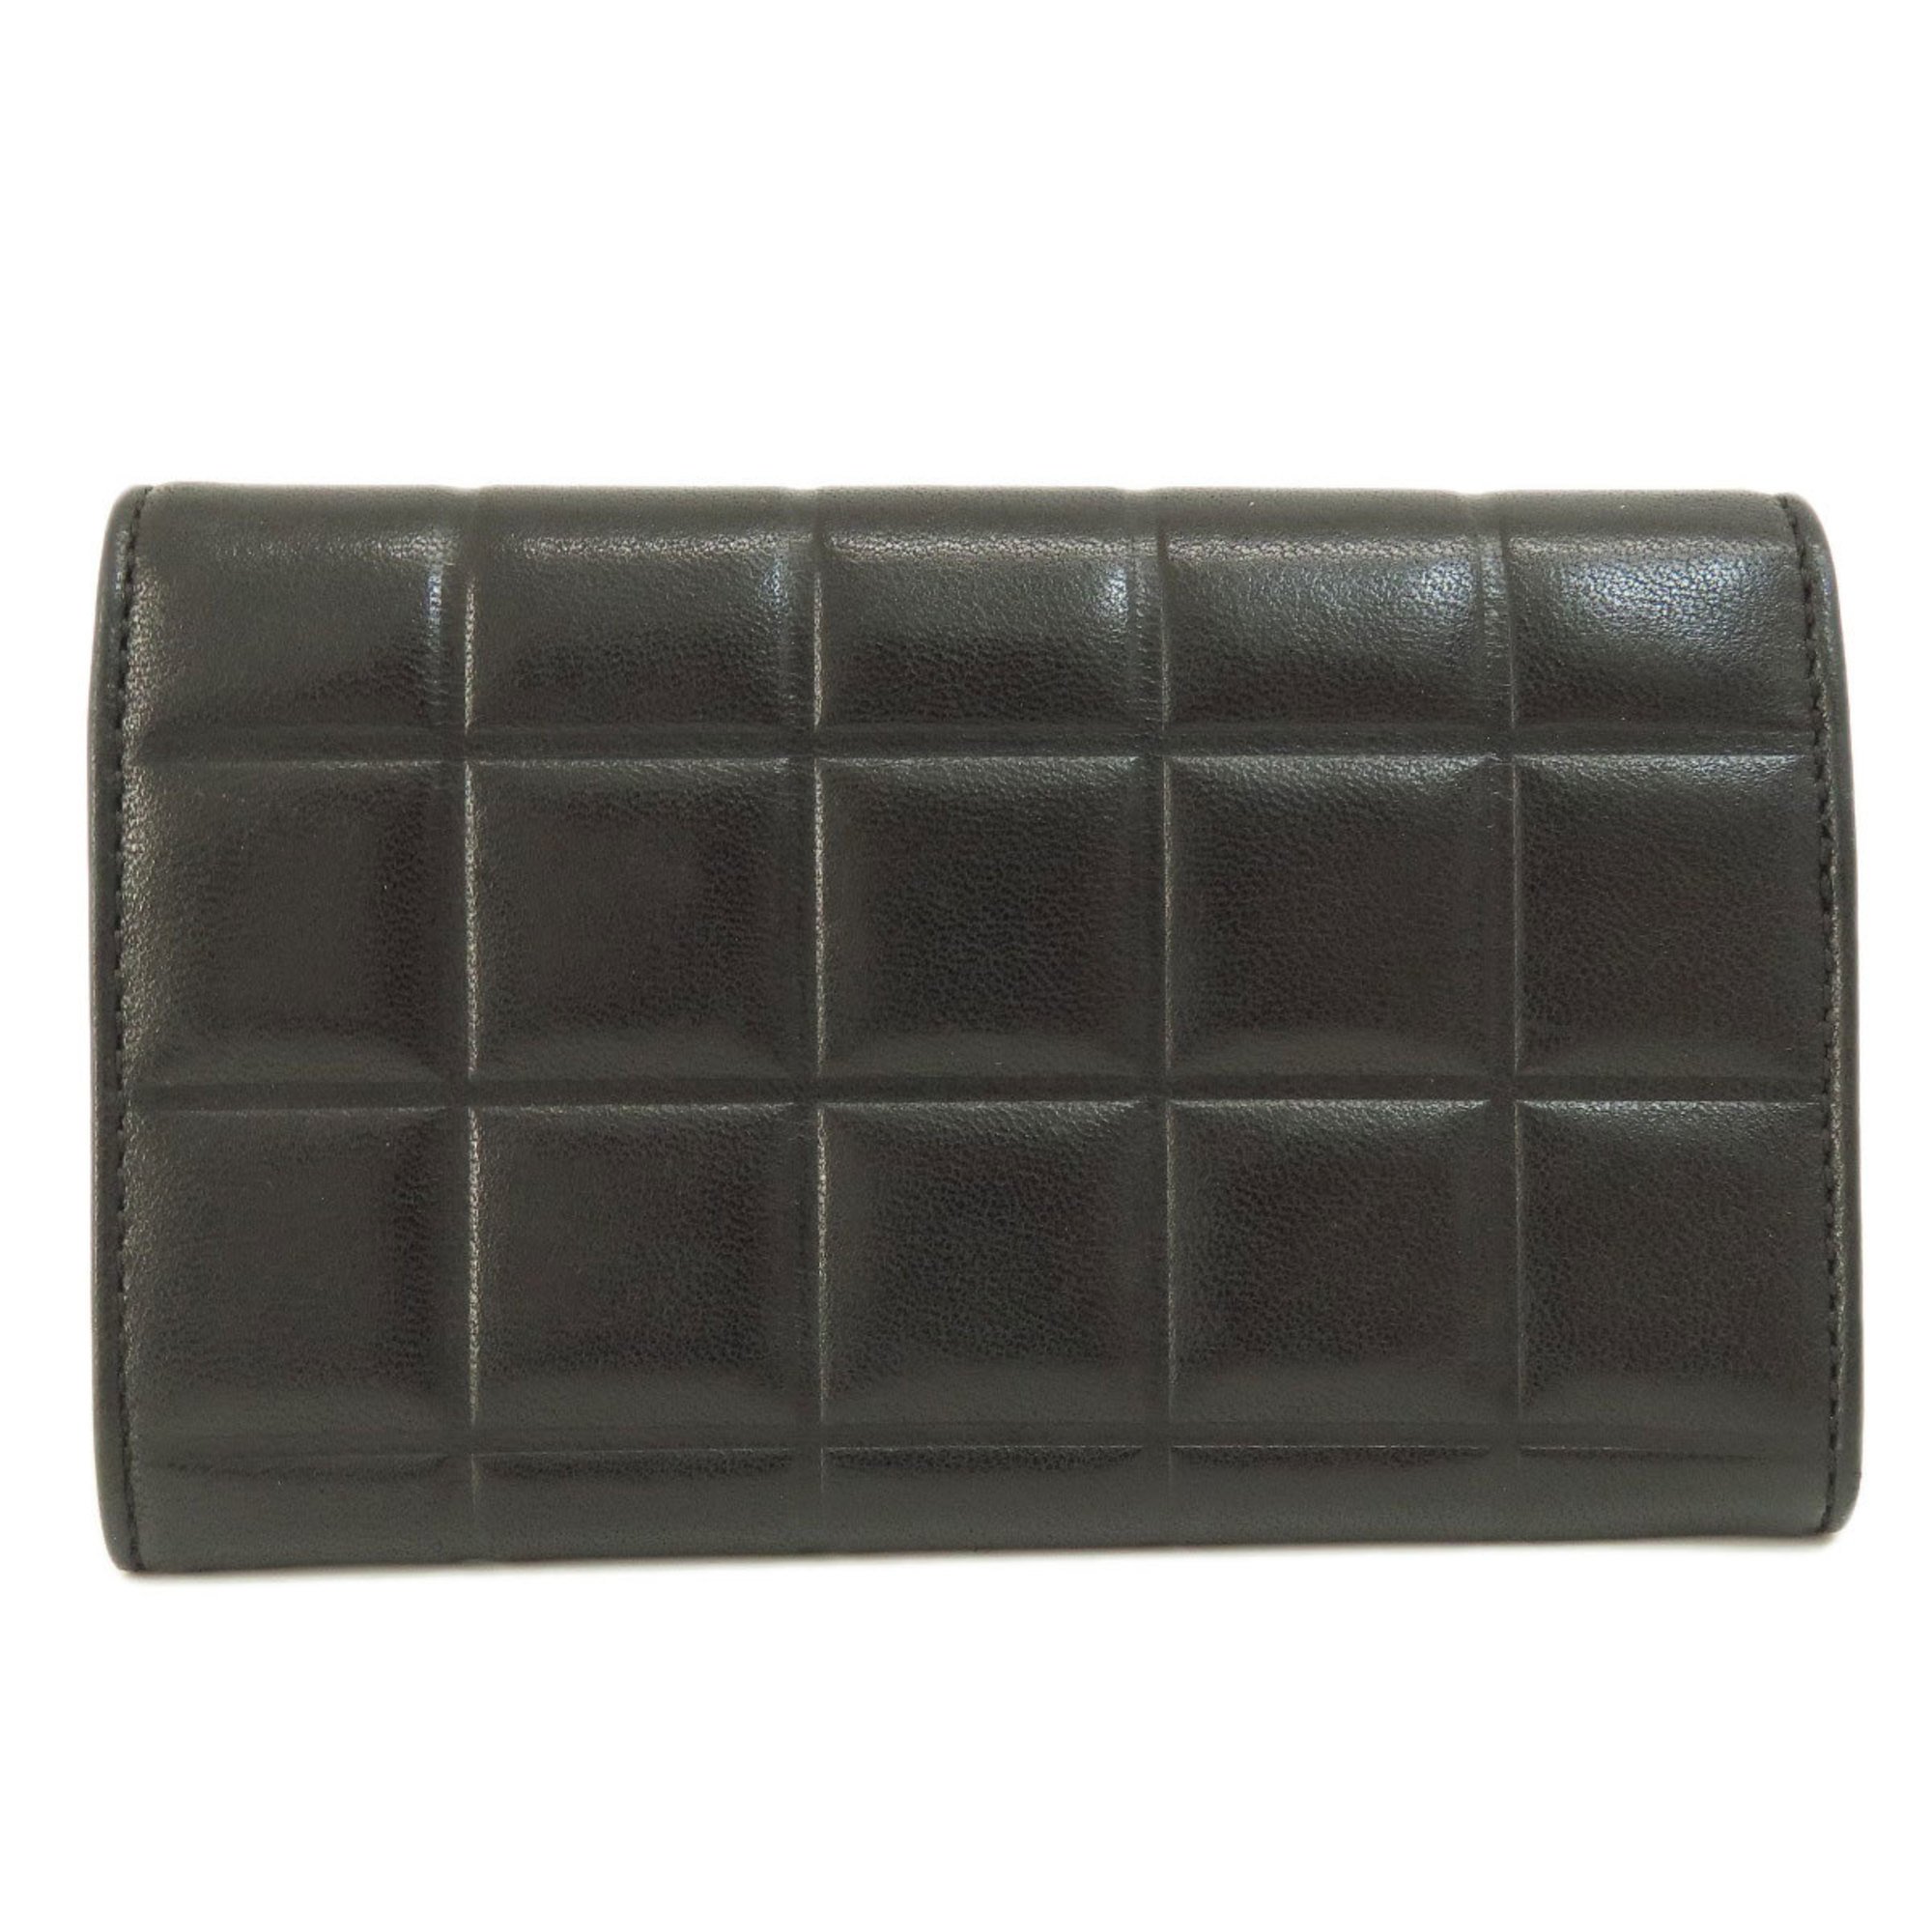 CHANEL Chocolate Bar Bi-fold Wallet Calfskin Women's